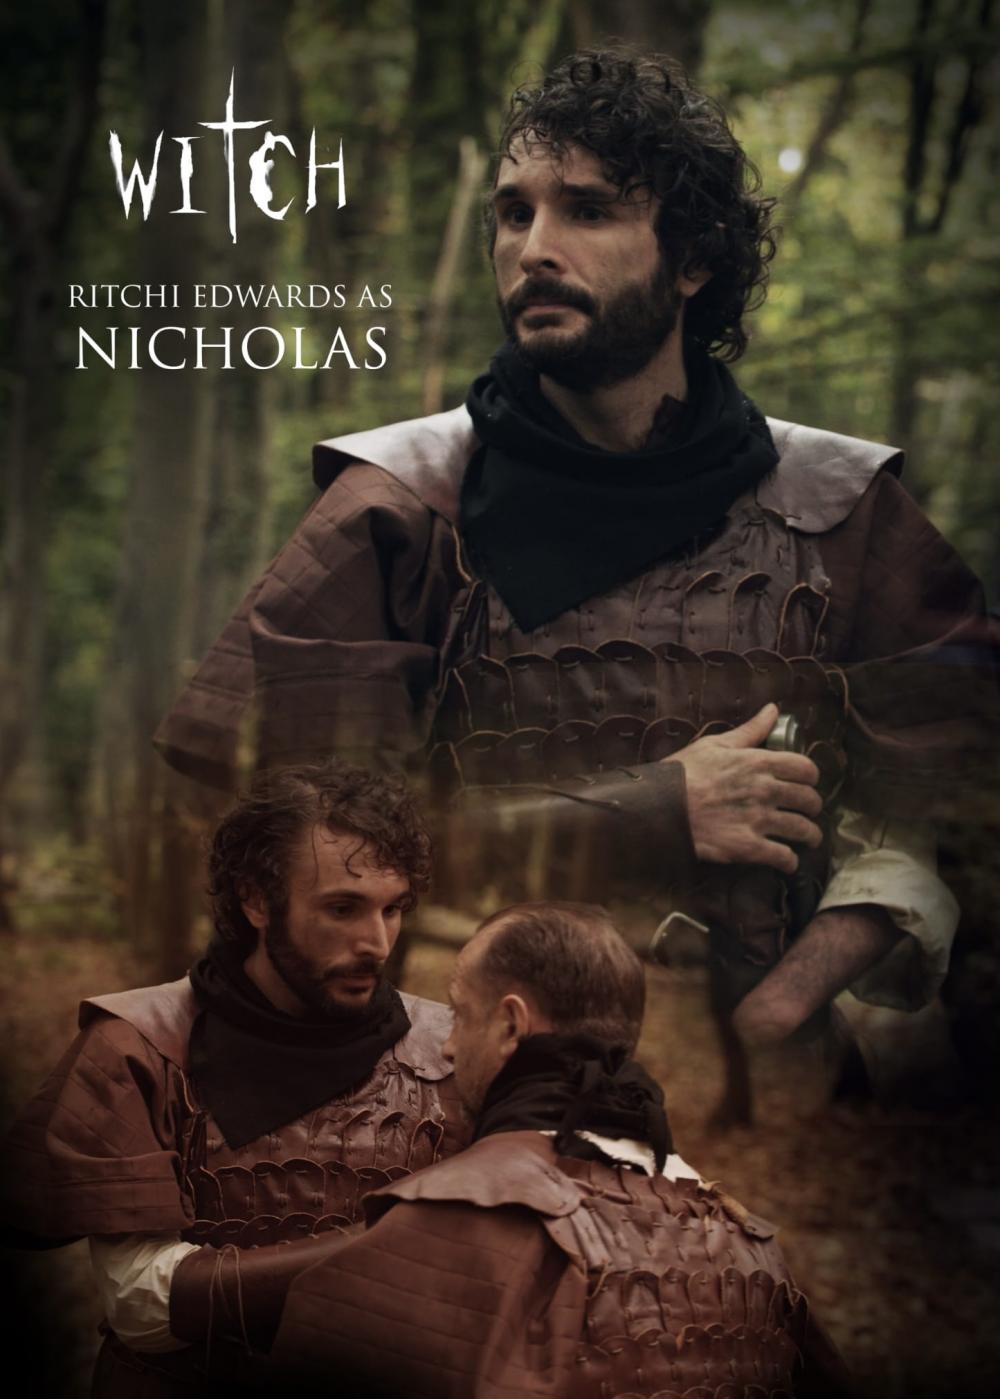 Nicholas Character poster